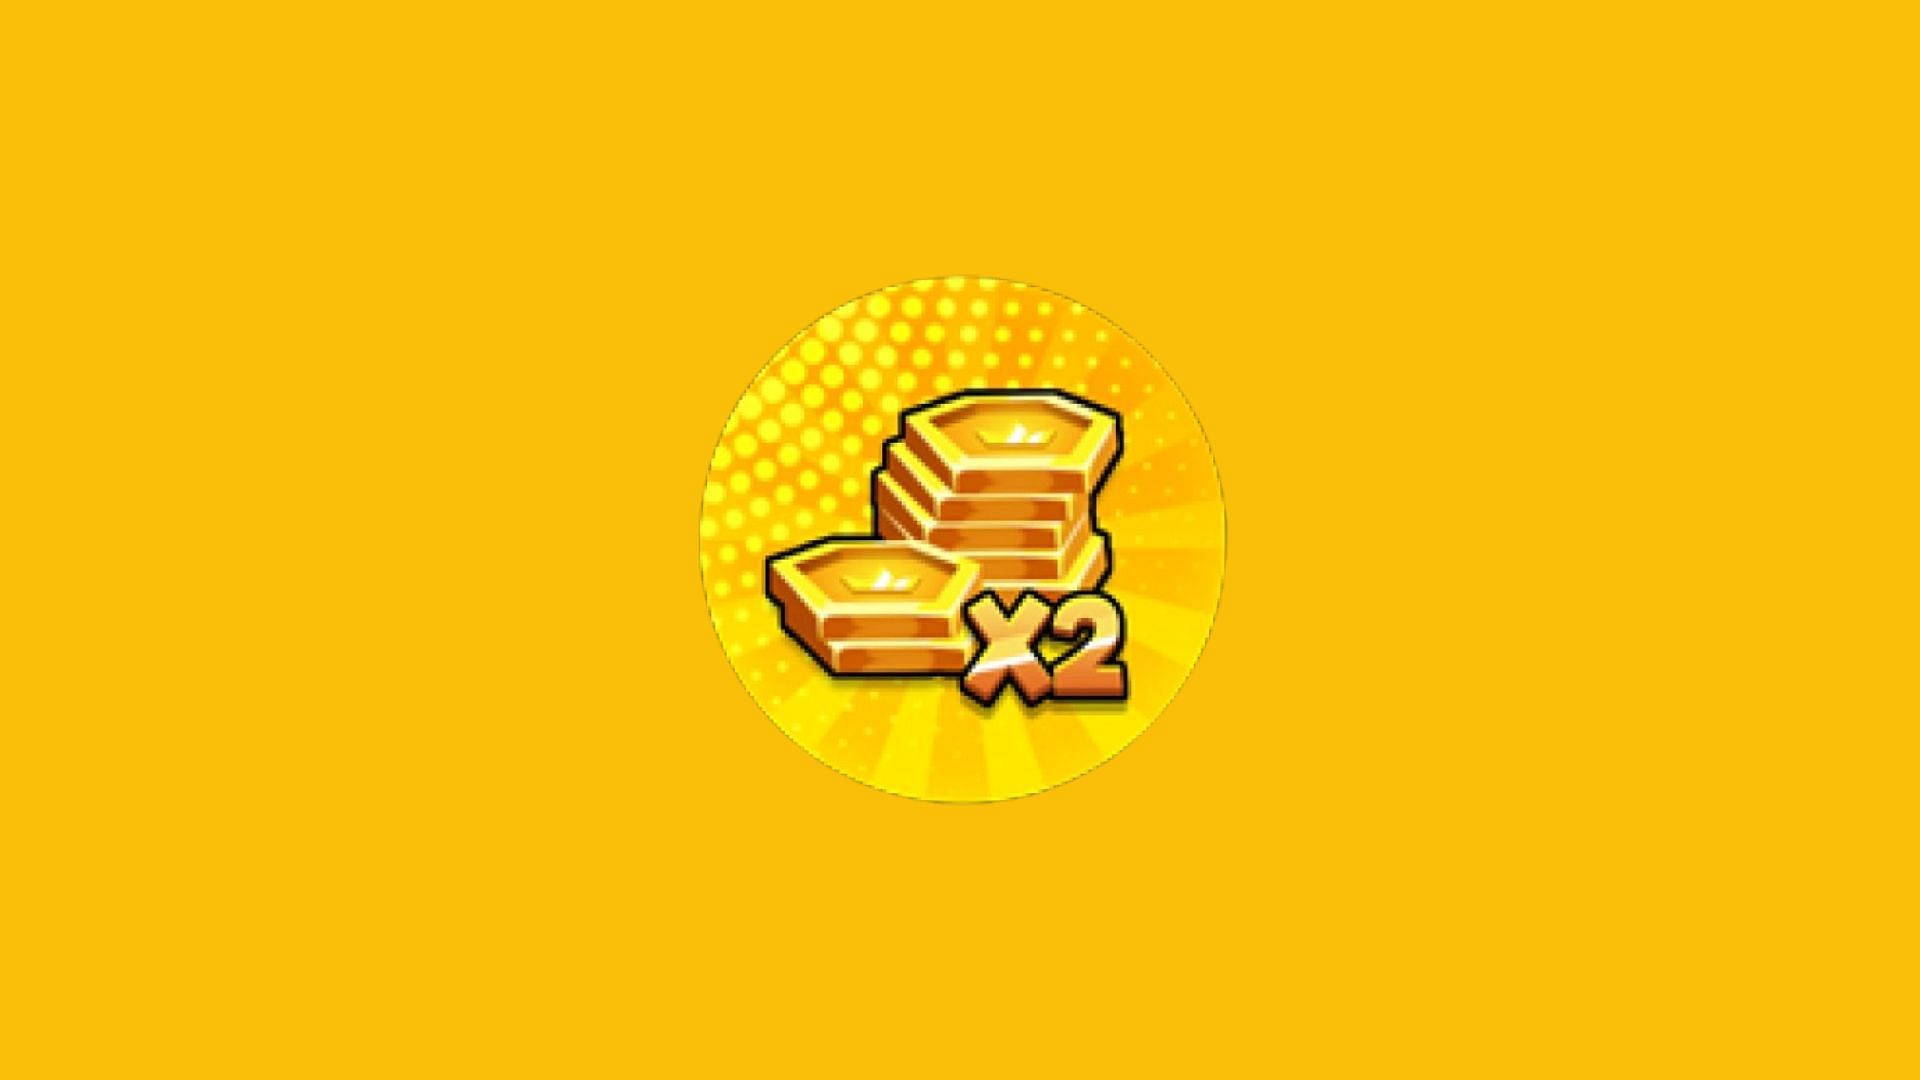 x2 Money Gamepass (Image via Roblox and Sportskeeda)